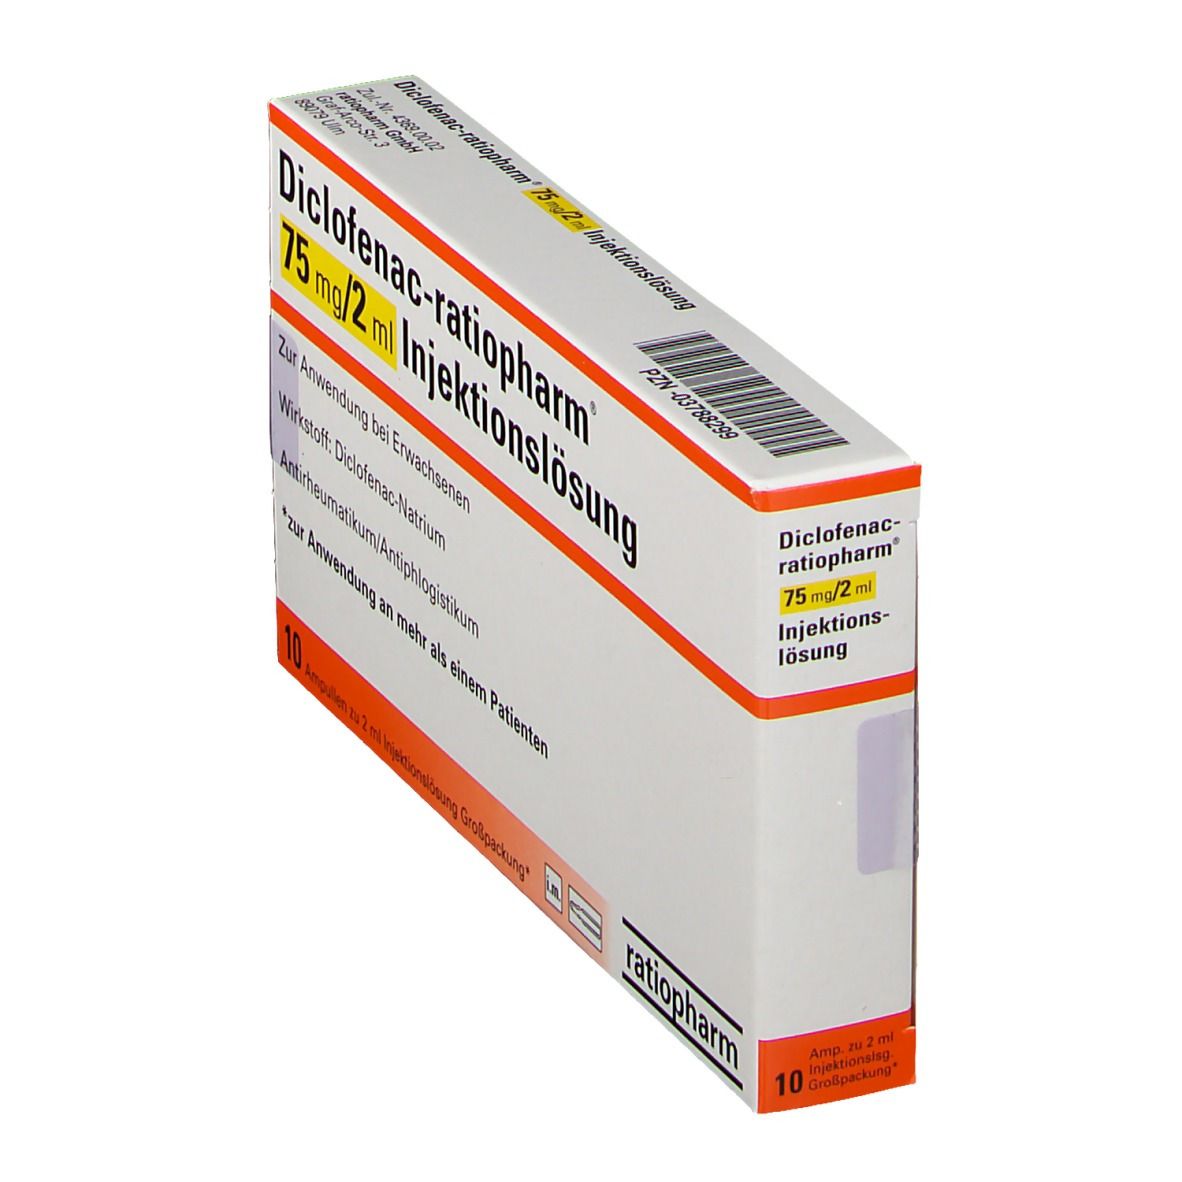 Diclofenac-ratiopharm® 75 mg/2 ml